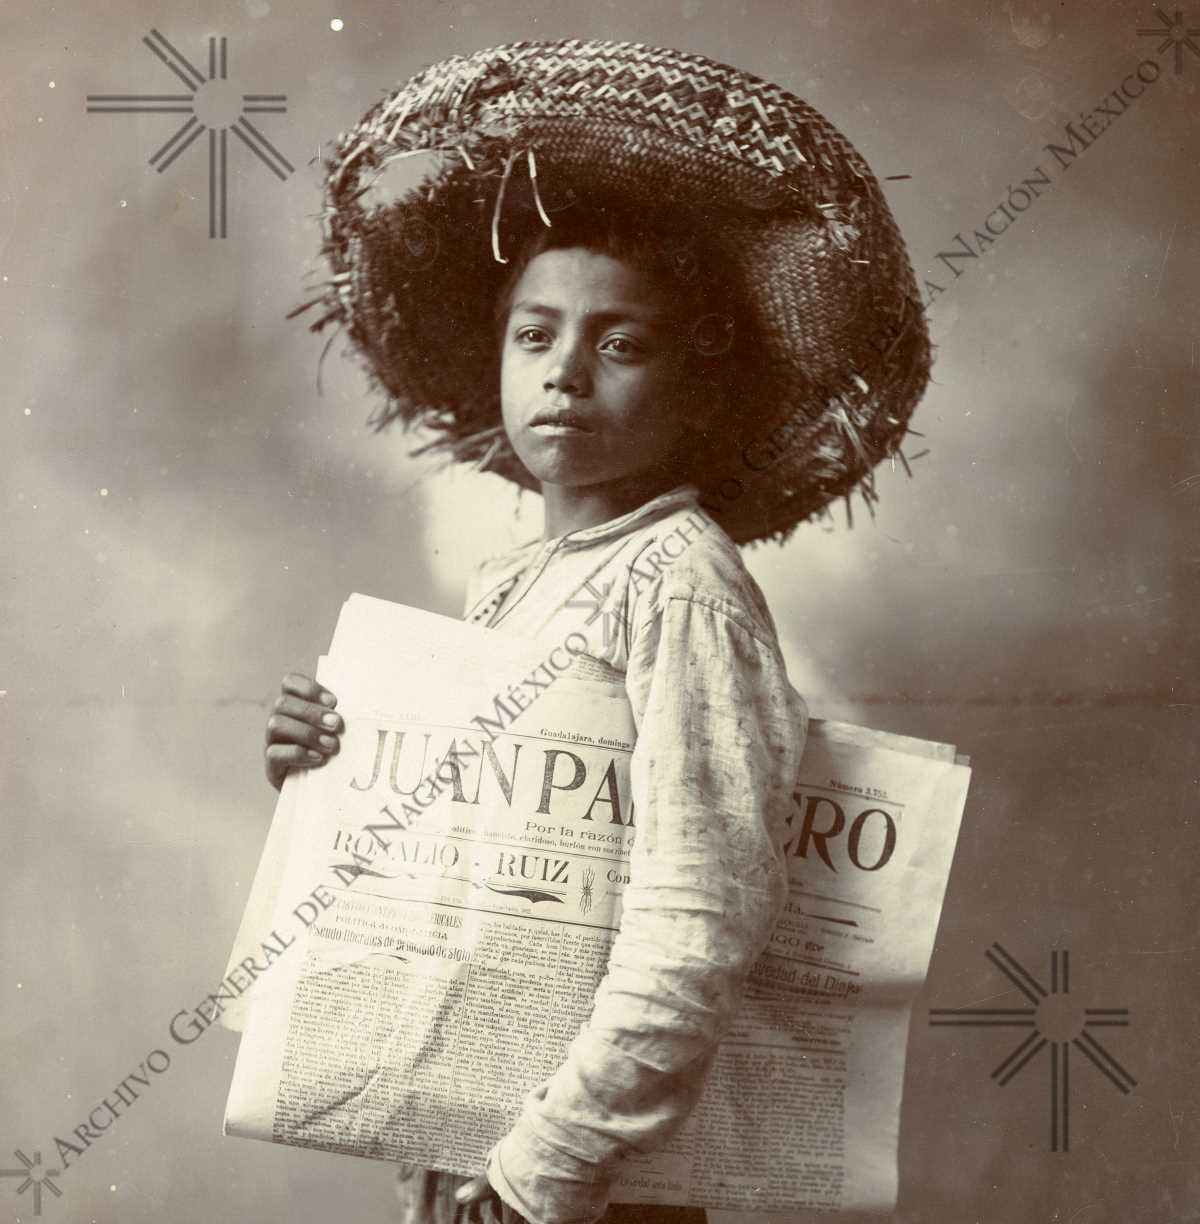 Boy voceador with a copy of the newspaper “Juan Panadero” published in Guadalajara, Jalisco (1905).